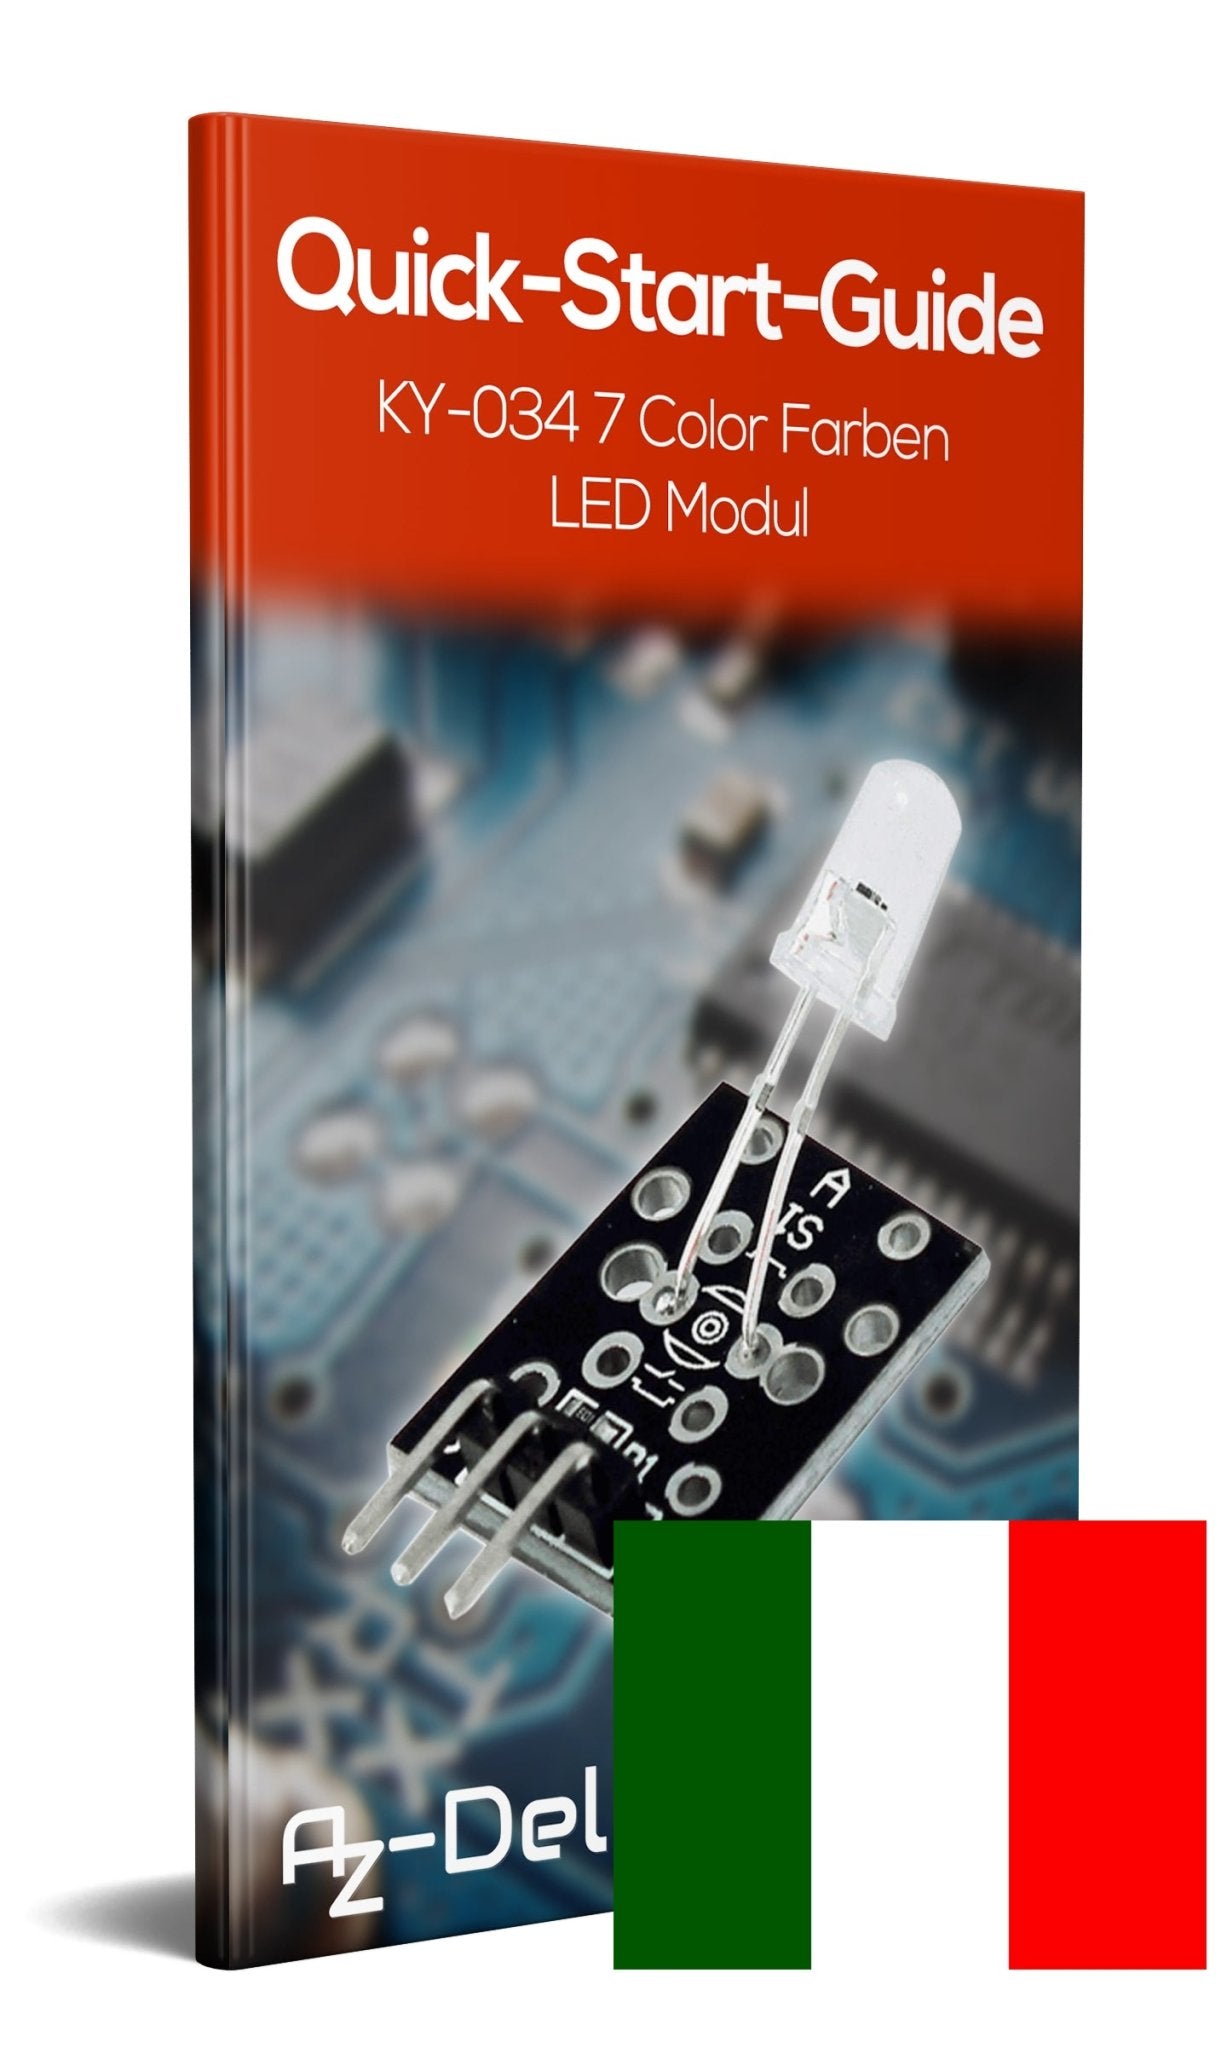 KY-034 7 Color Farben LED Modul - AZ-Delivery